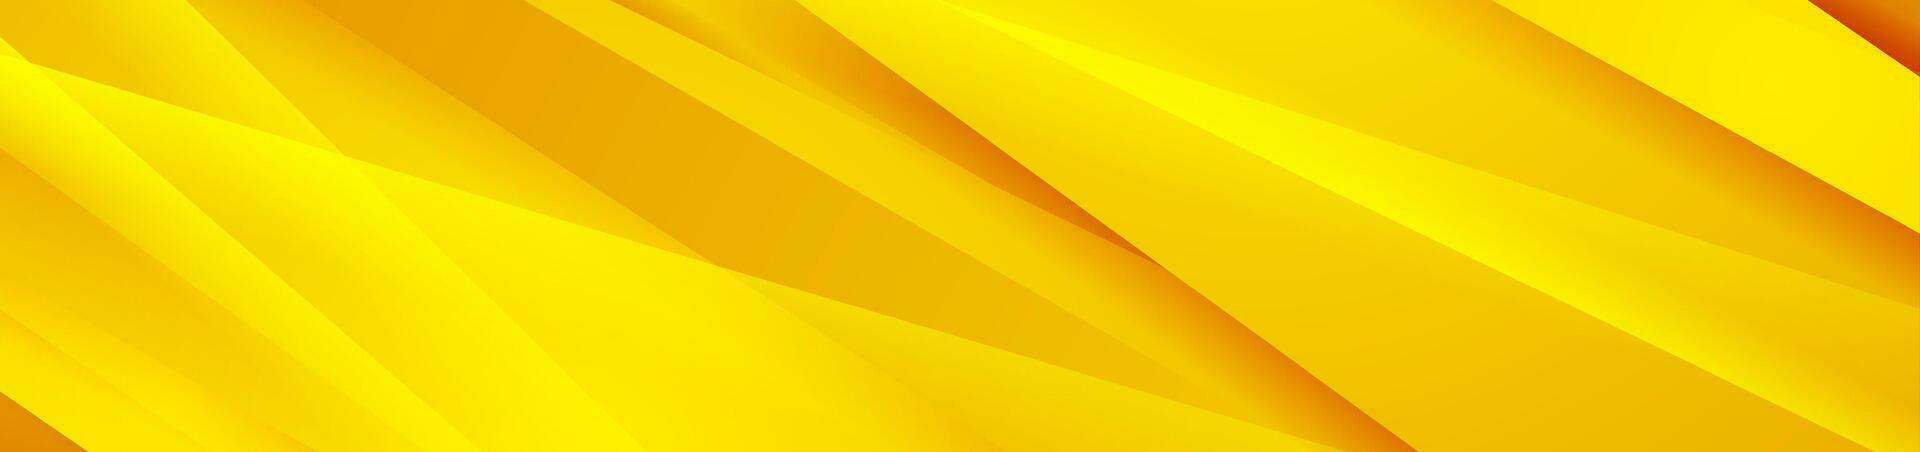 brilhante amarelo lustroso listras abstrato fundo vetor